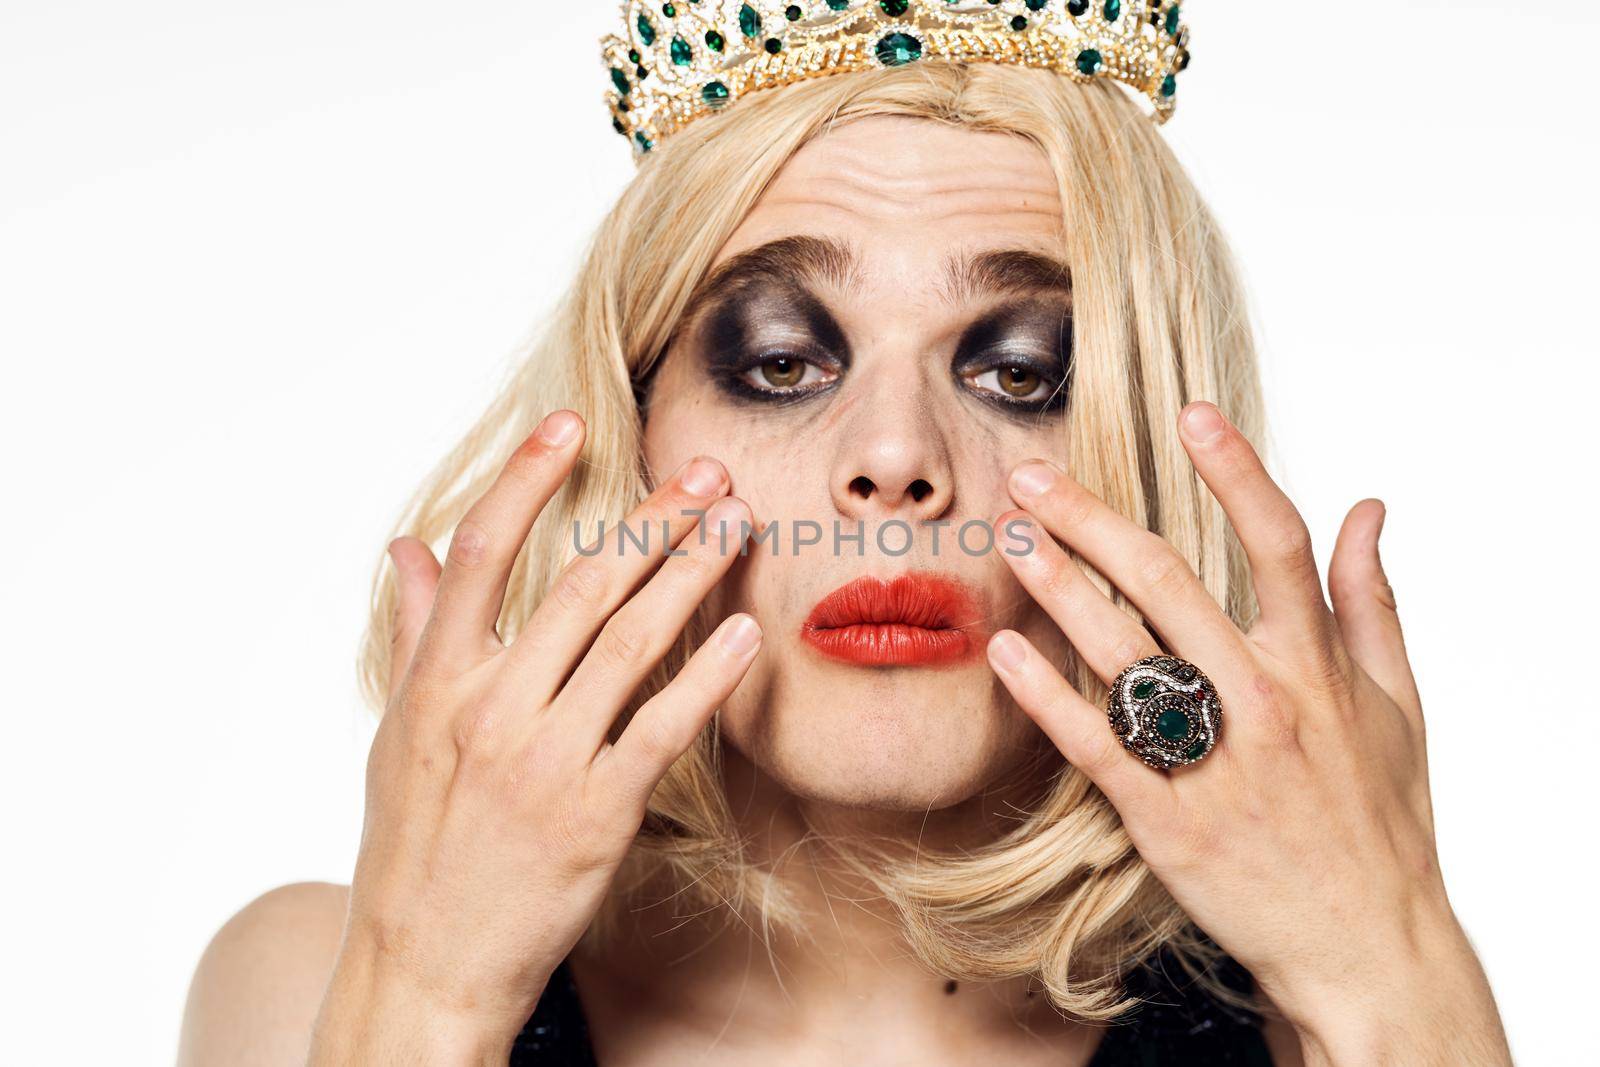 man in womens wig crossdresser makeup lgbt community by Vichizh